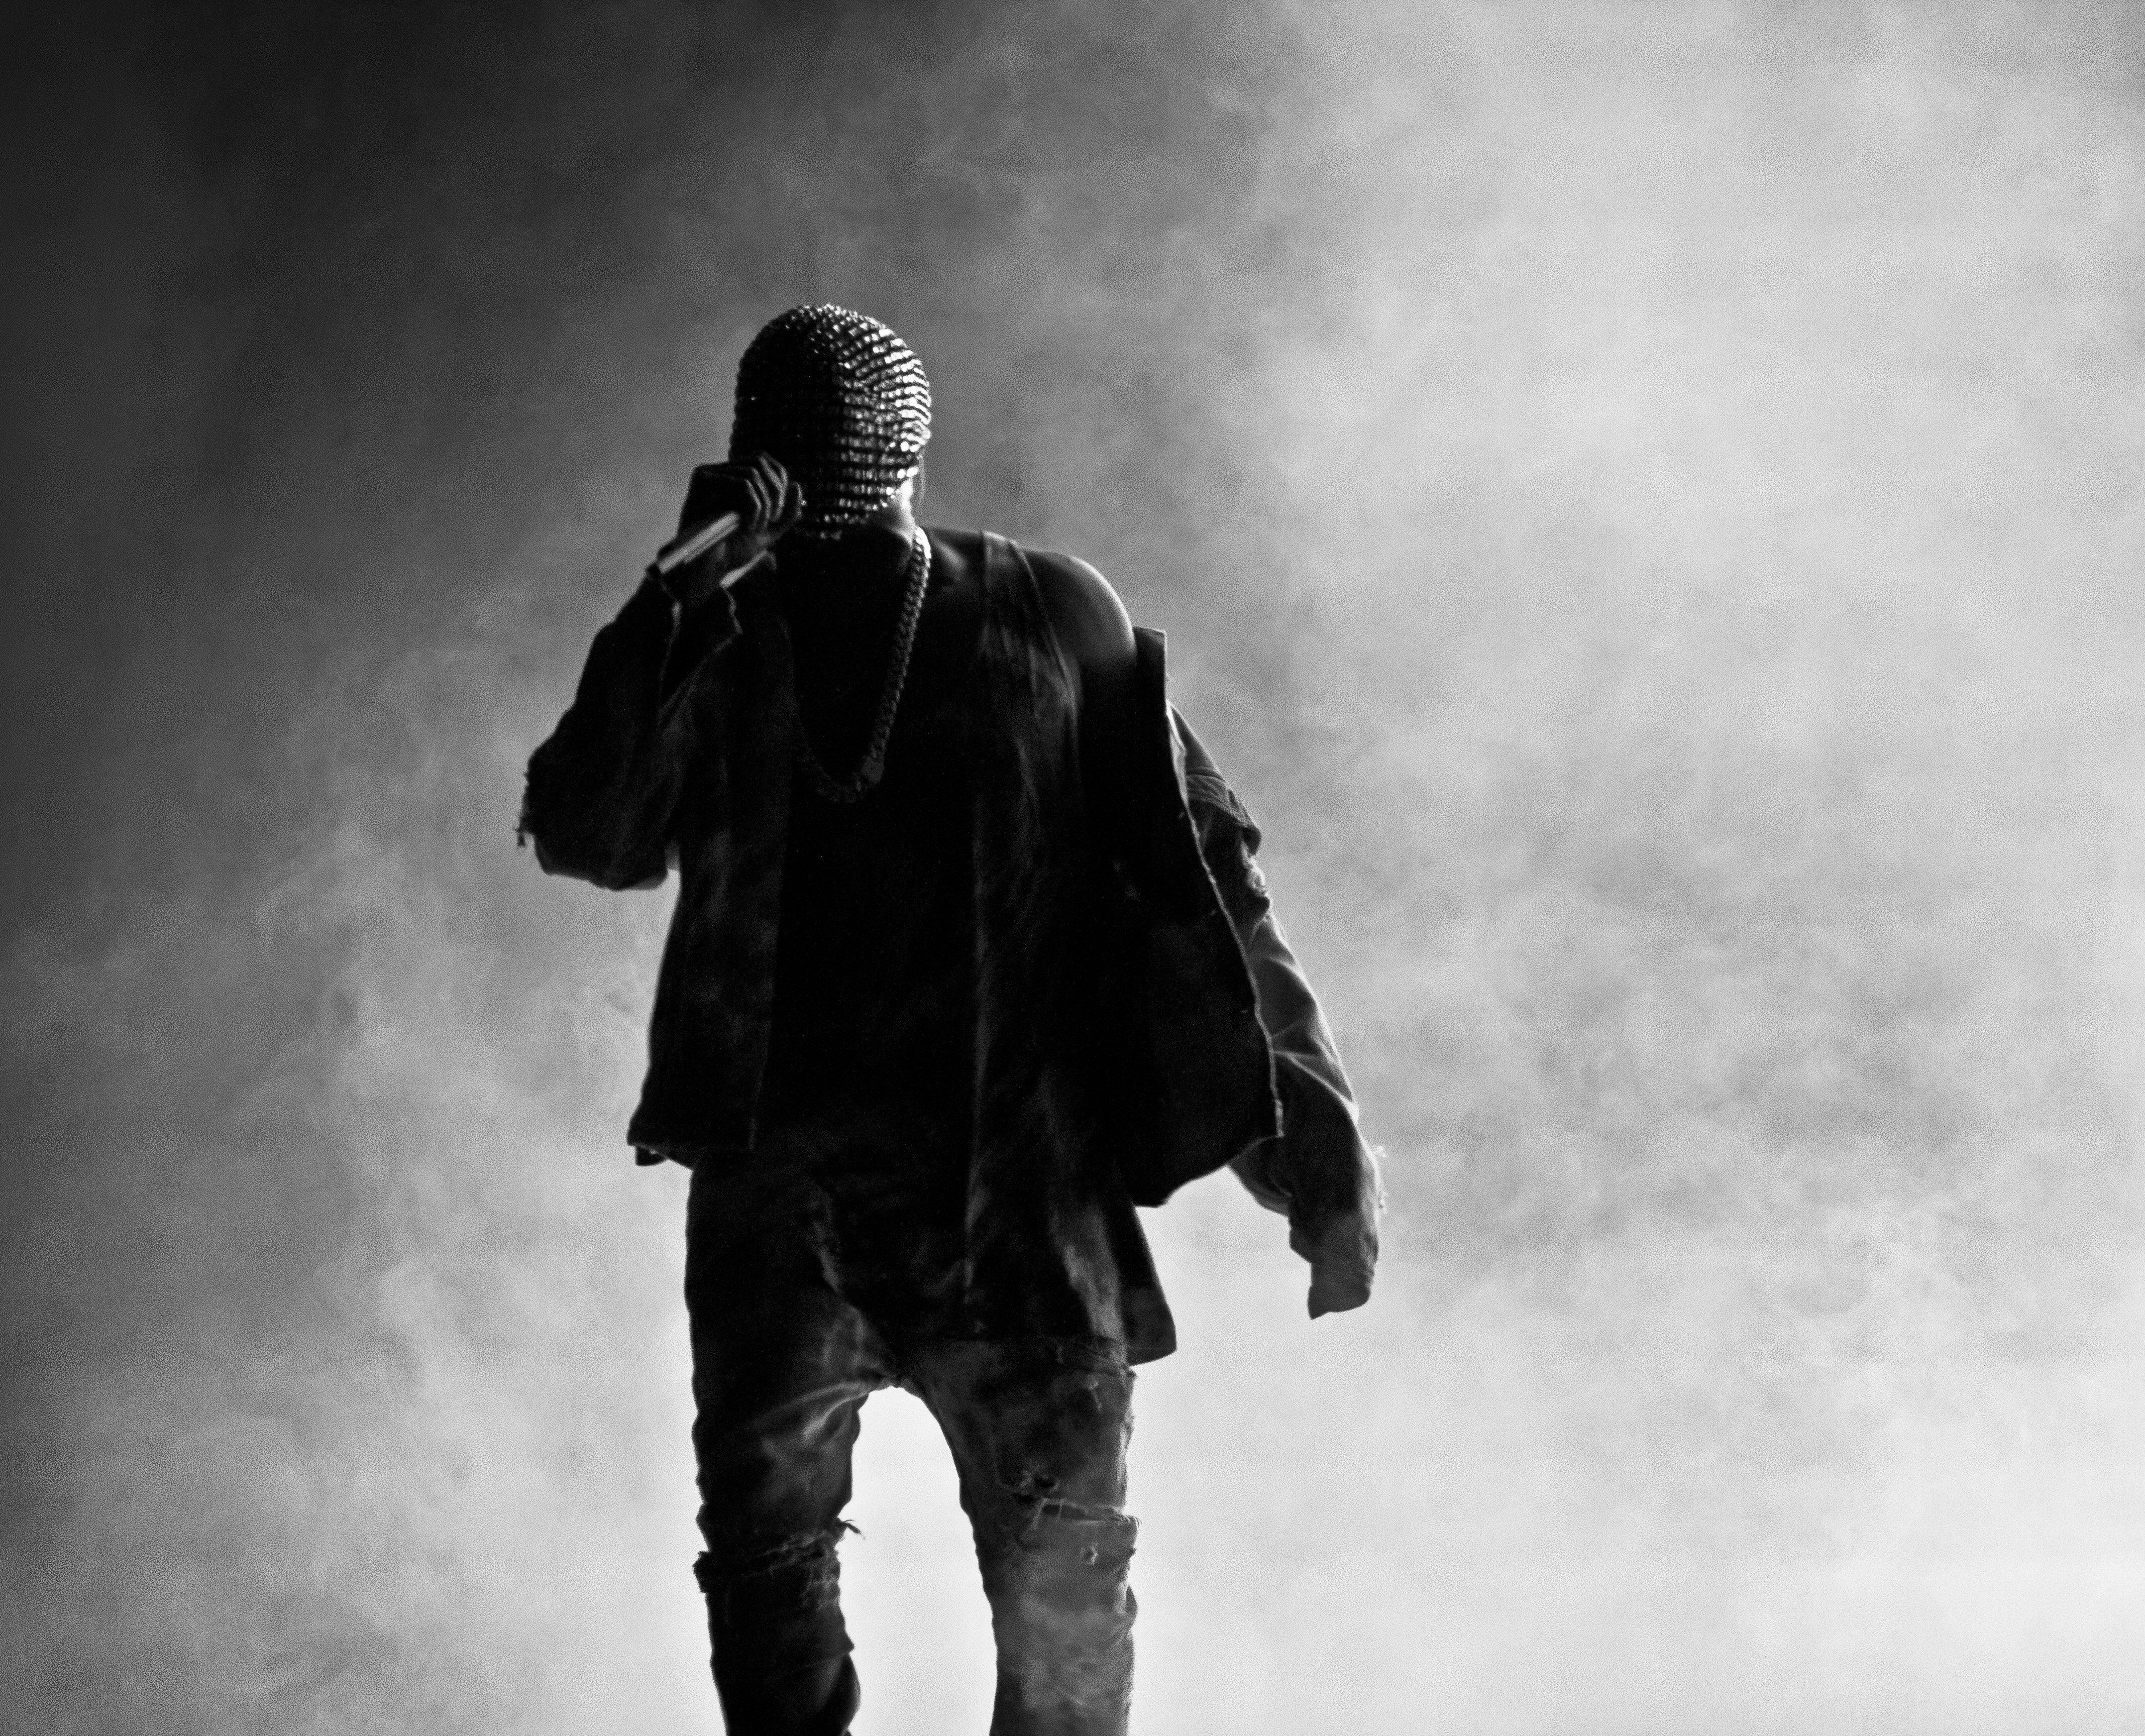 Reseña sobre el álbum de Kanye west 